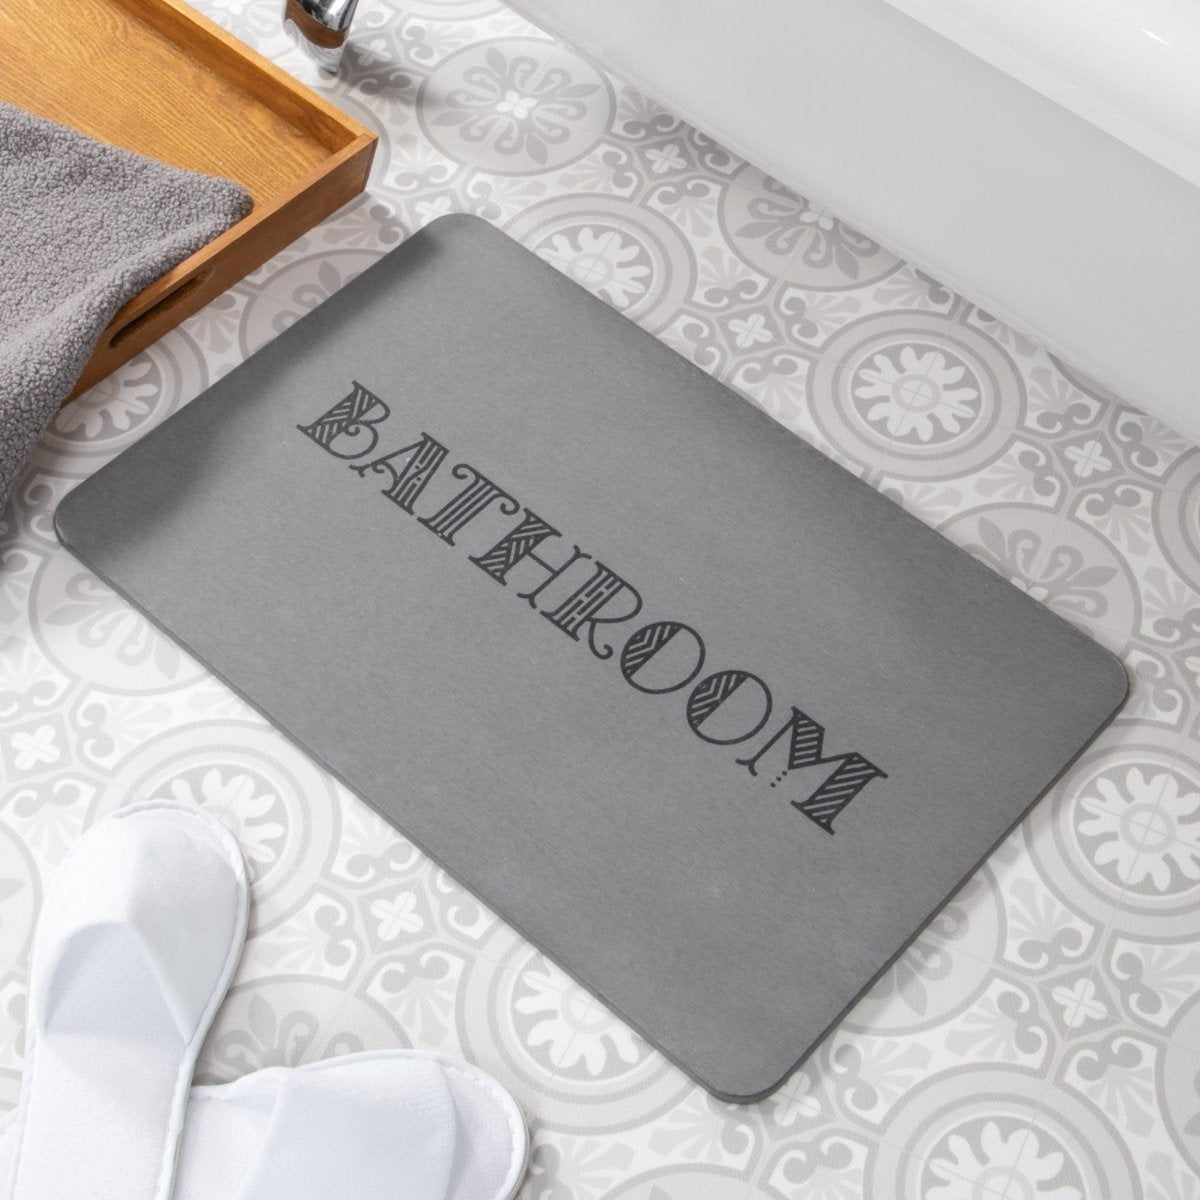 Bathroom Grey Bath Mat - Funny Bathroom Decor - Bathroom Floor Decor - Funny Bath Mat - Stone Non Slip Bath Mat - 39 X 60Cm - Slips Away - 1330514996 -